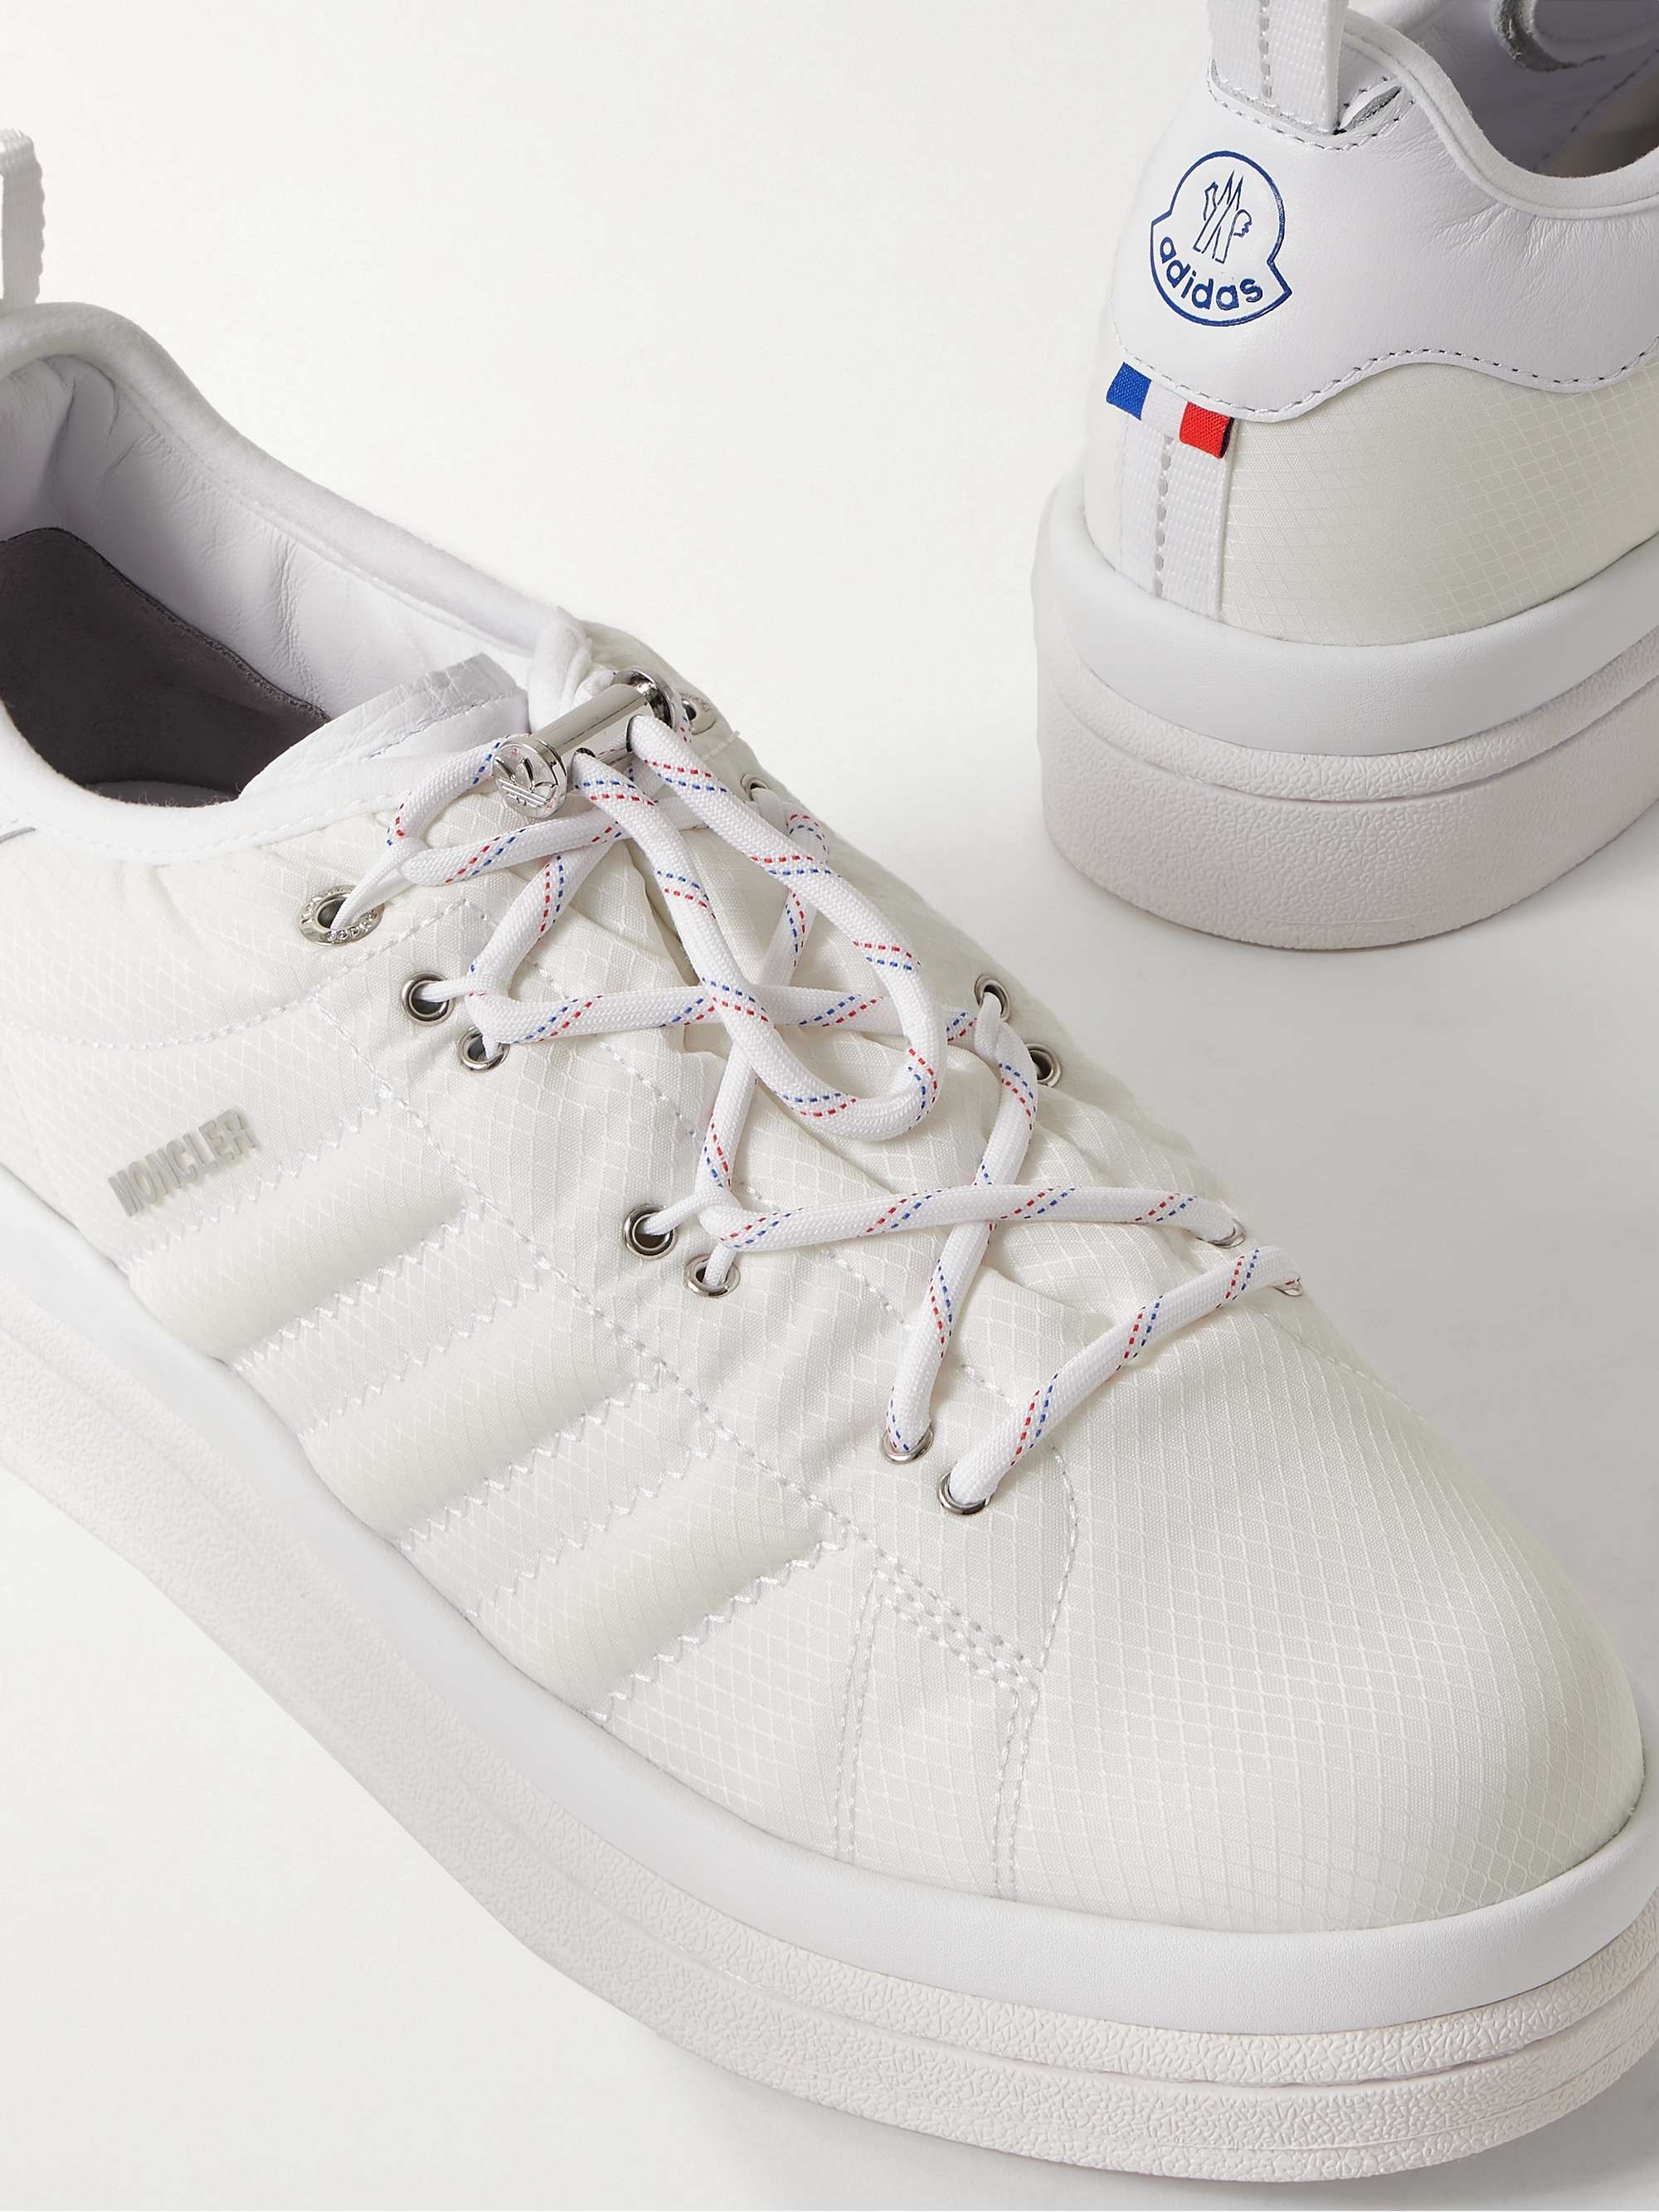 MONCLER GENIUS + adidas Originals Campus Leather-Trimmed Quilted GORE-TEX™  Sneakers for Men | MR PORTER